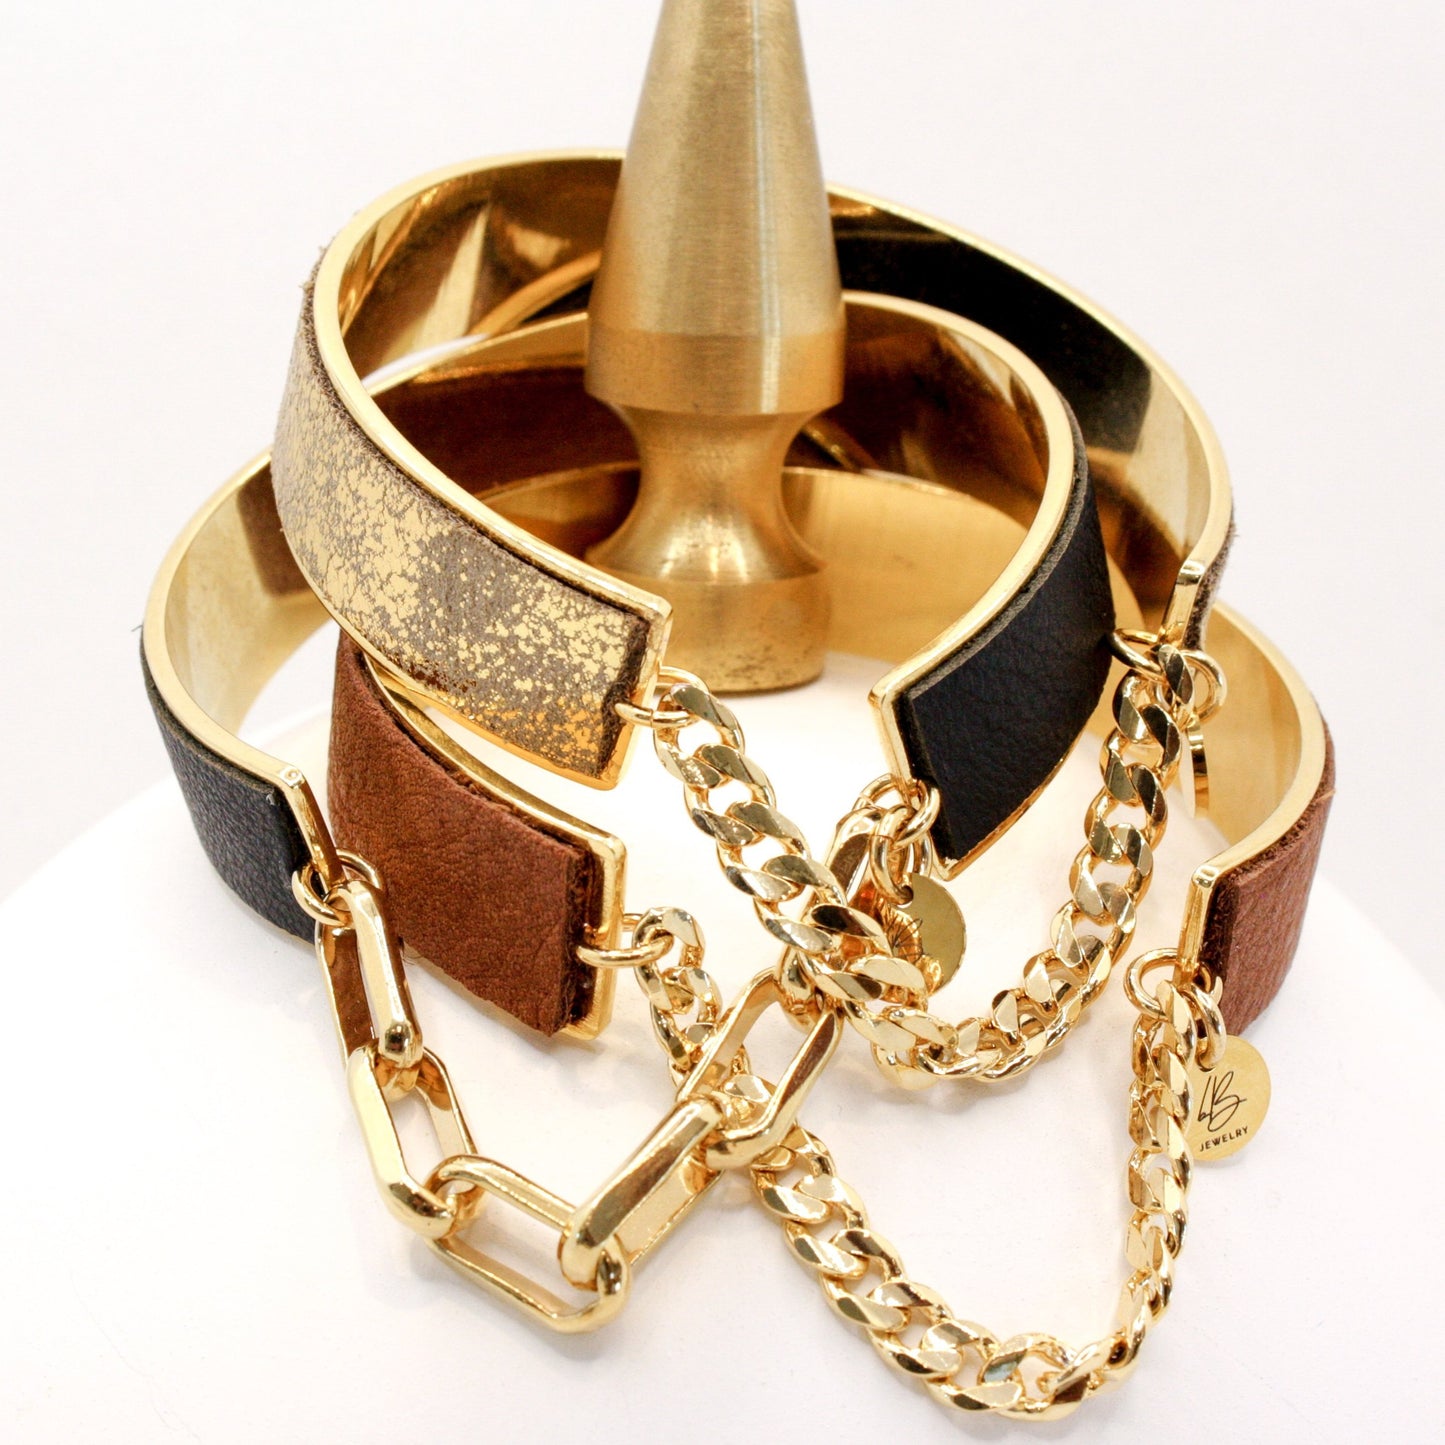 Bijoux Leather & Chain Cuff Bracelet : Metallic